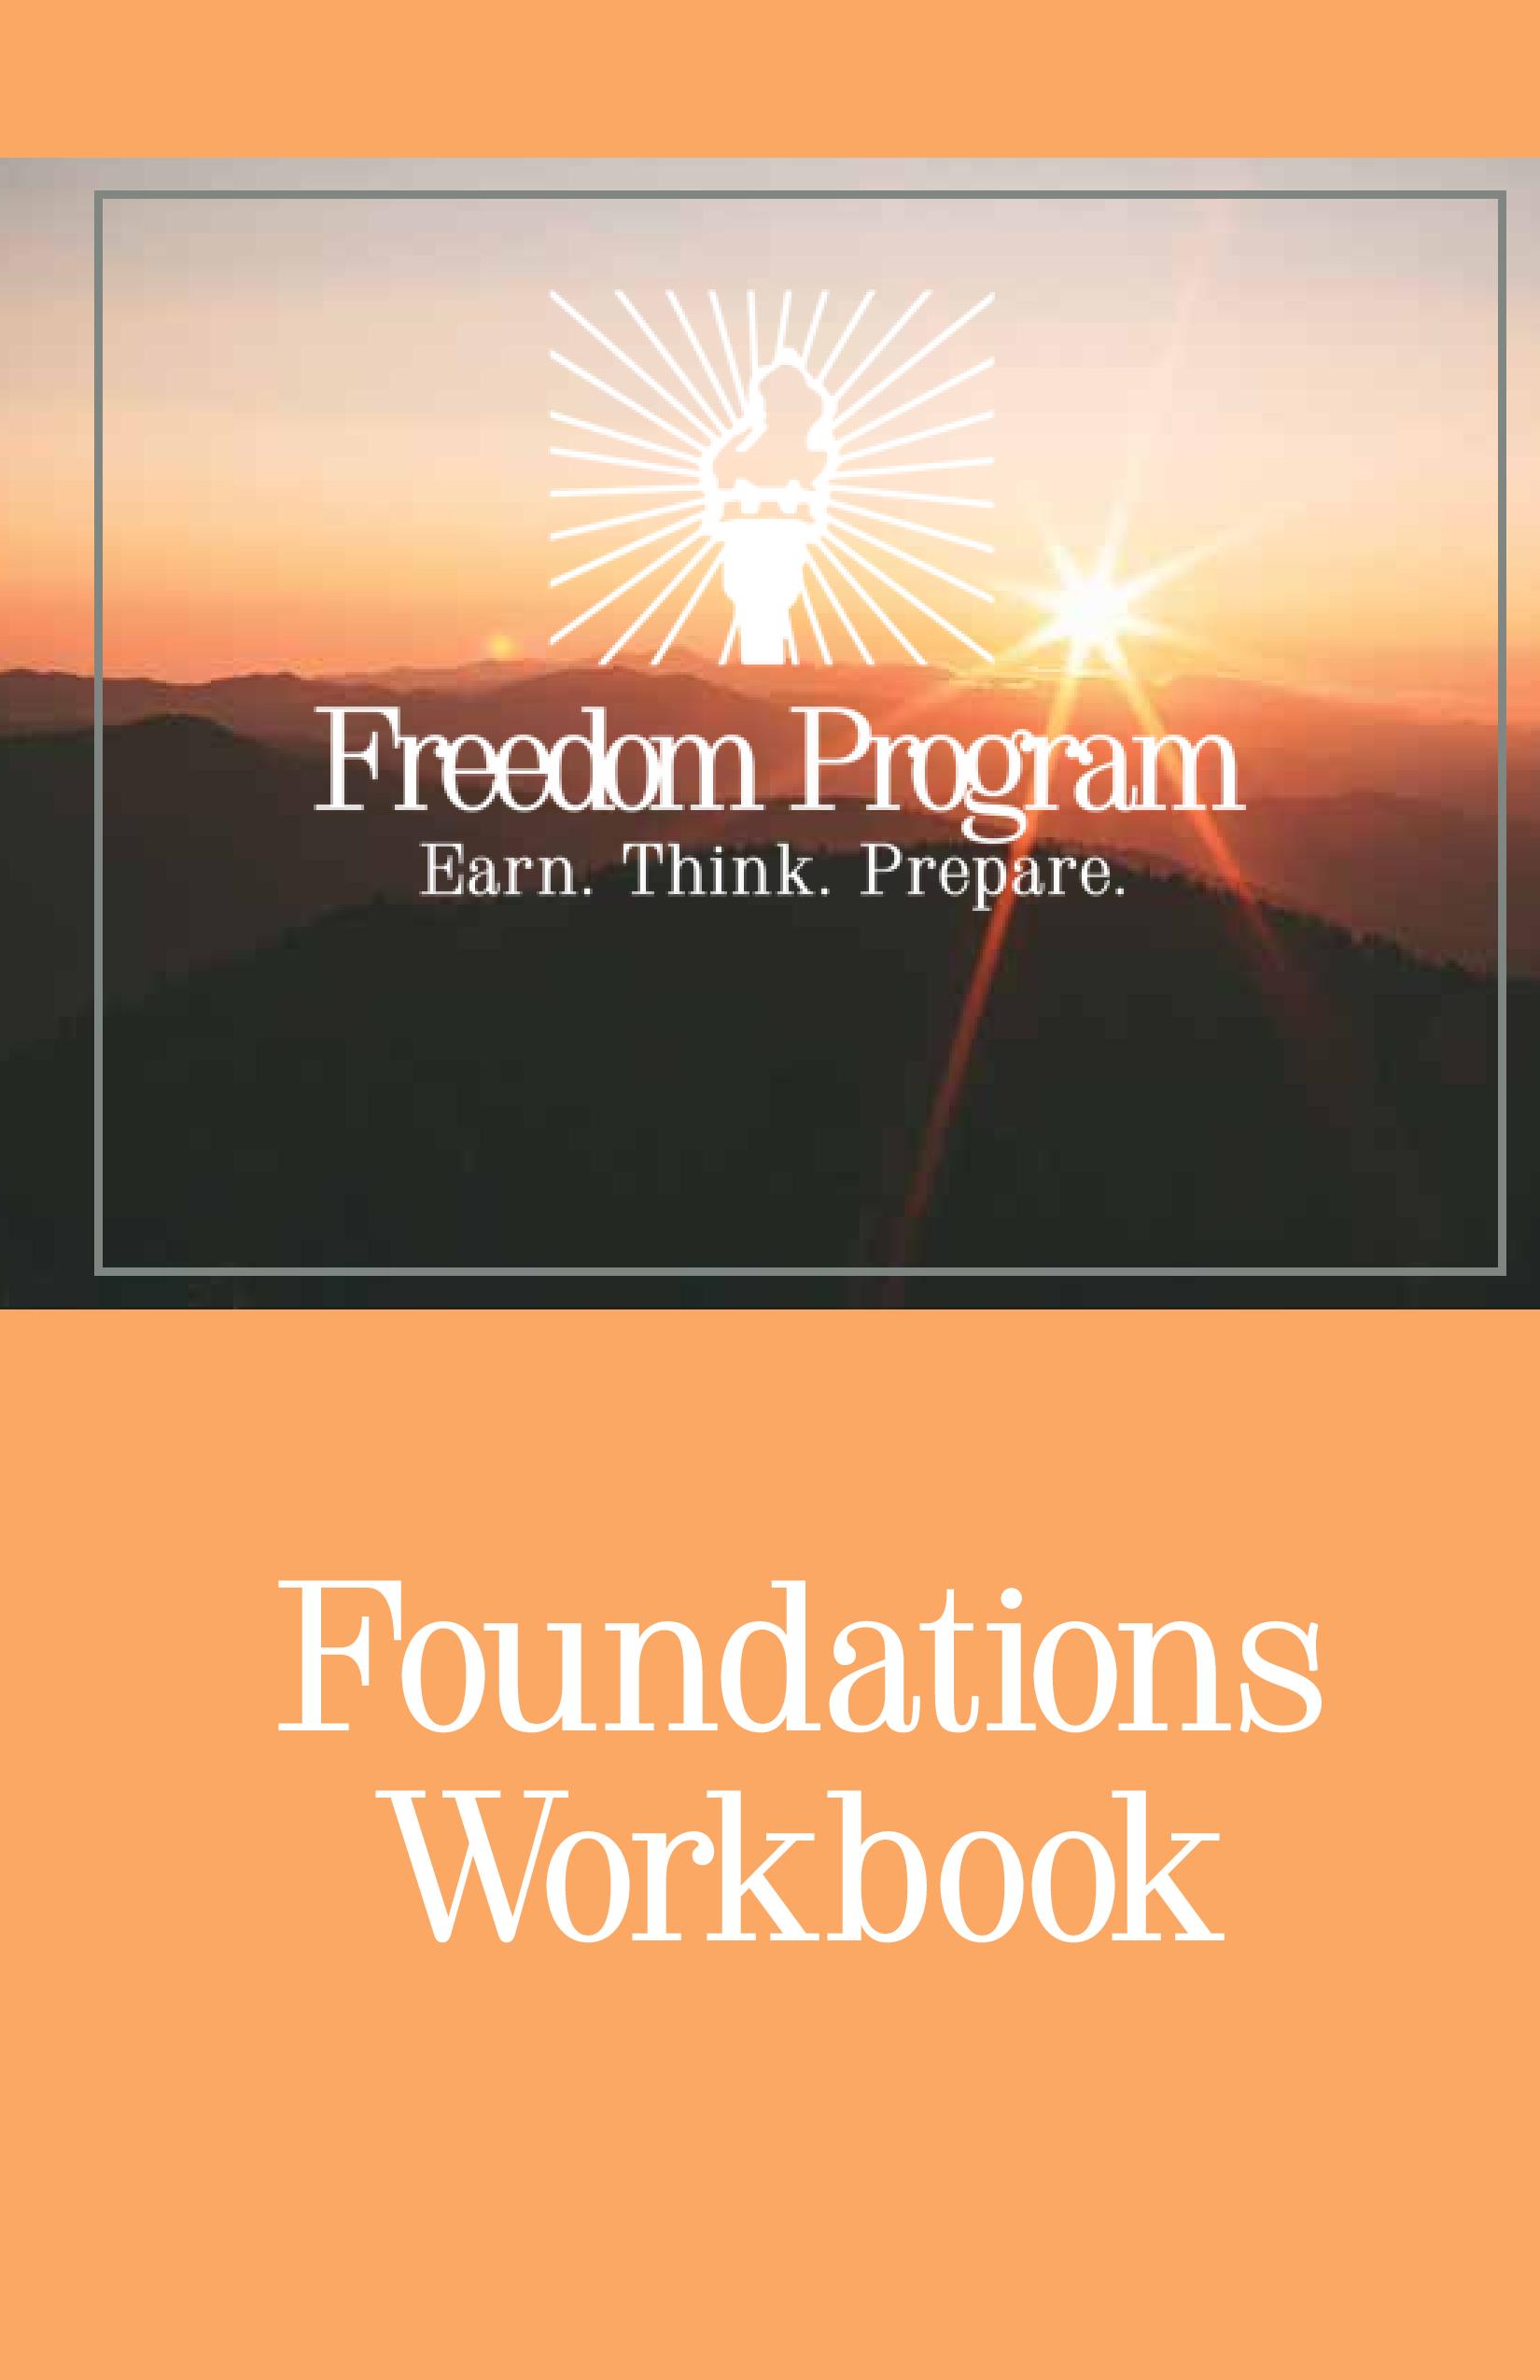 FreePro Workbook (Foundations)